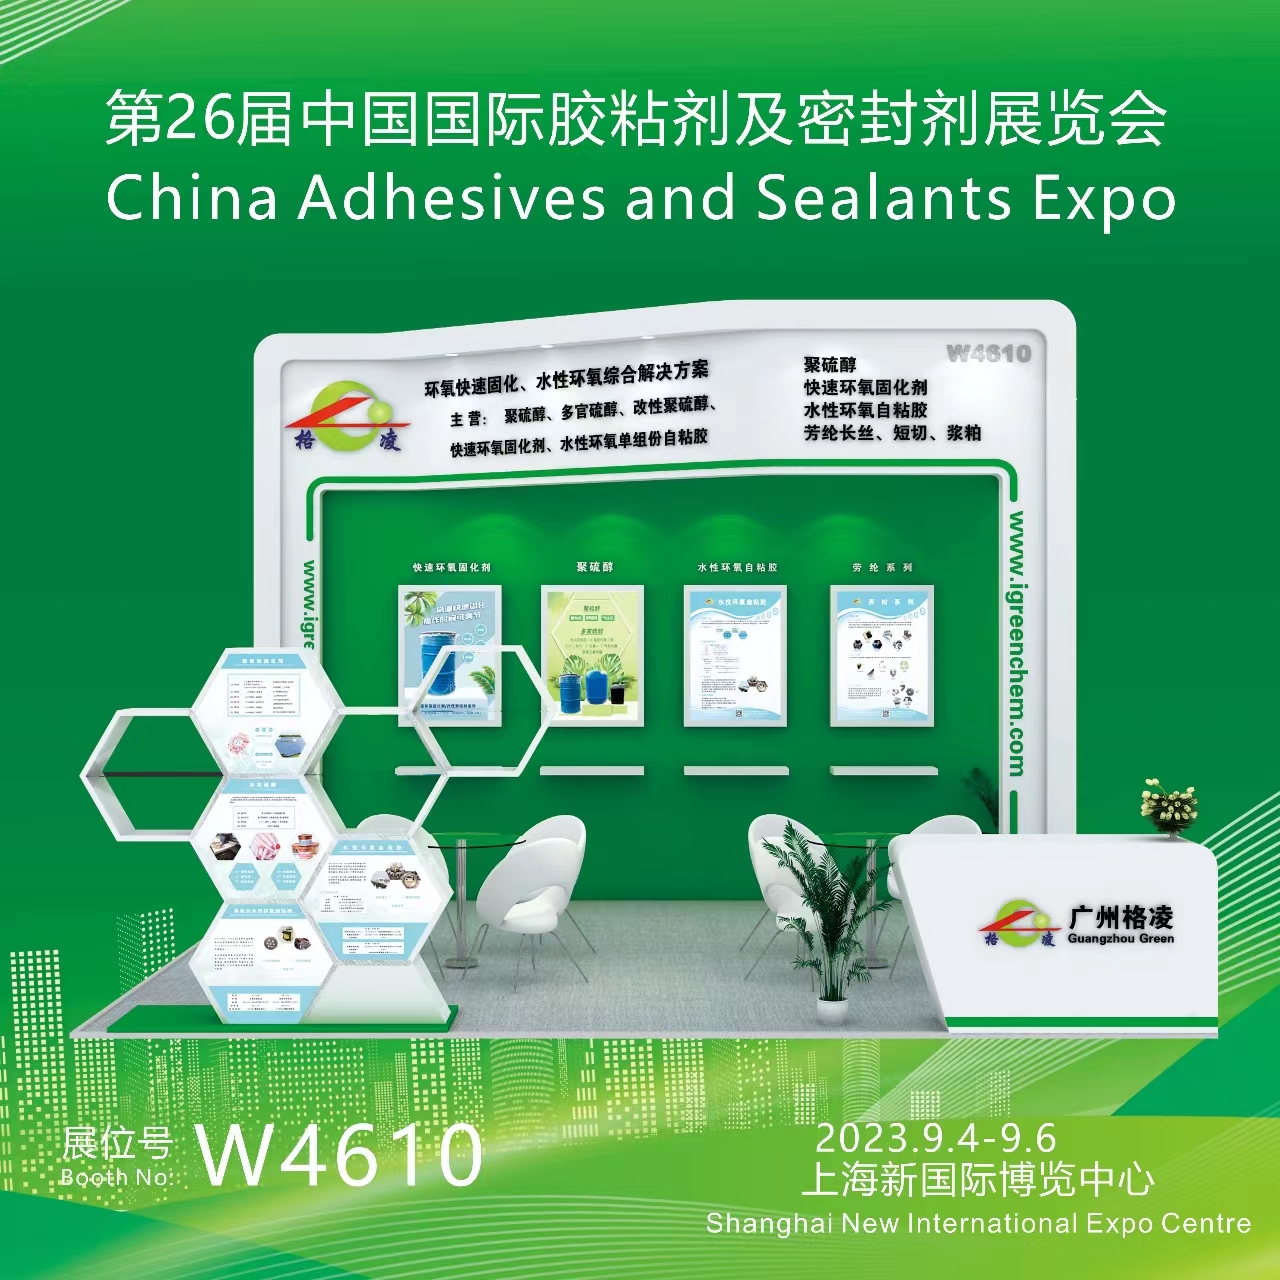 The 26th China Adhesives and Sealants Exhibition